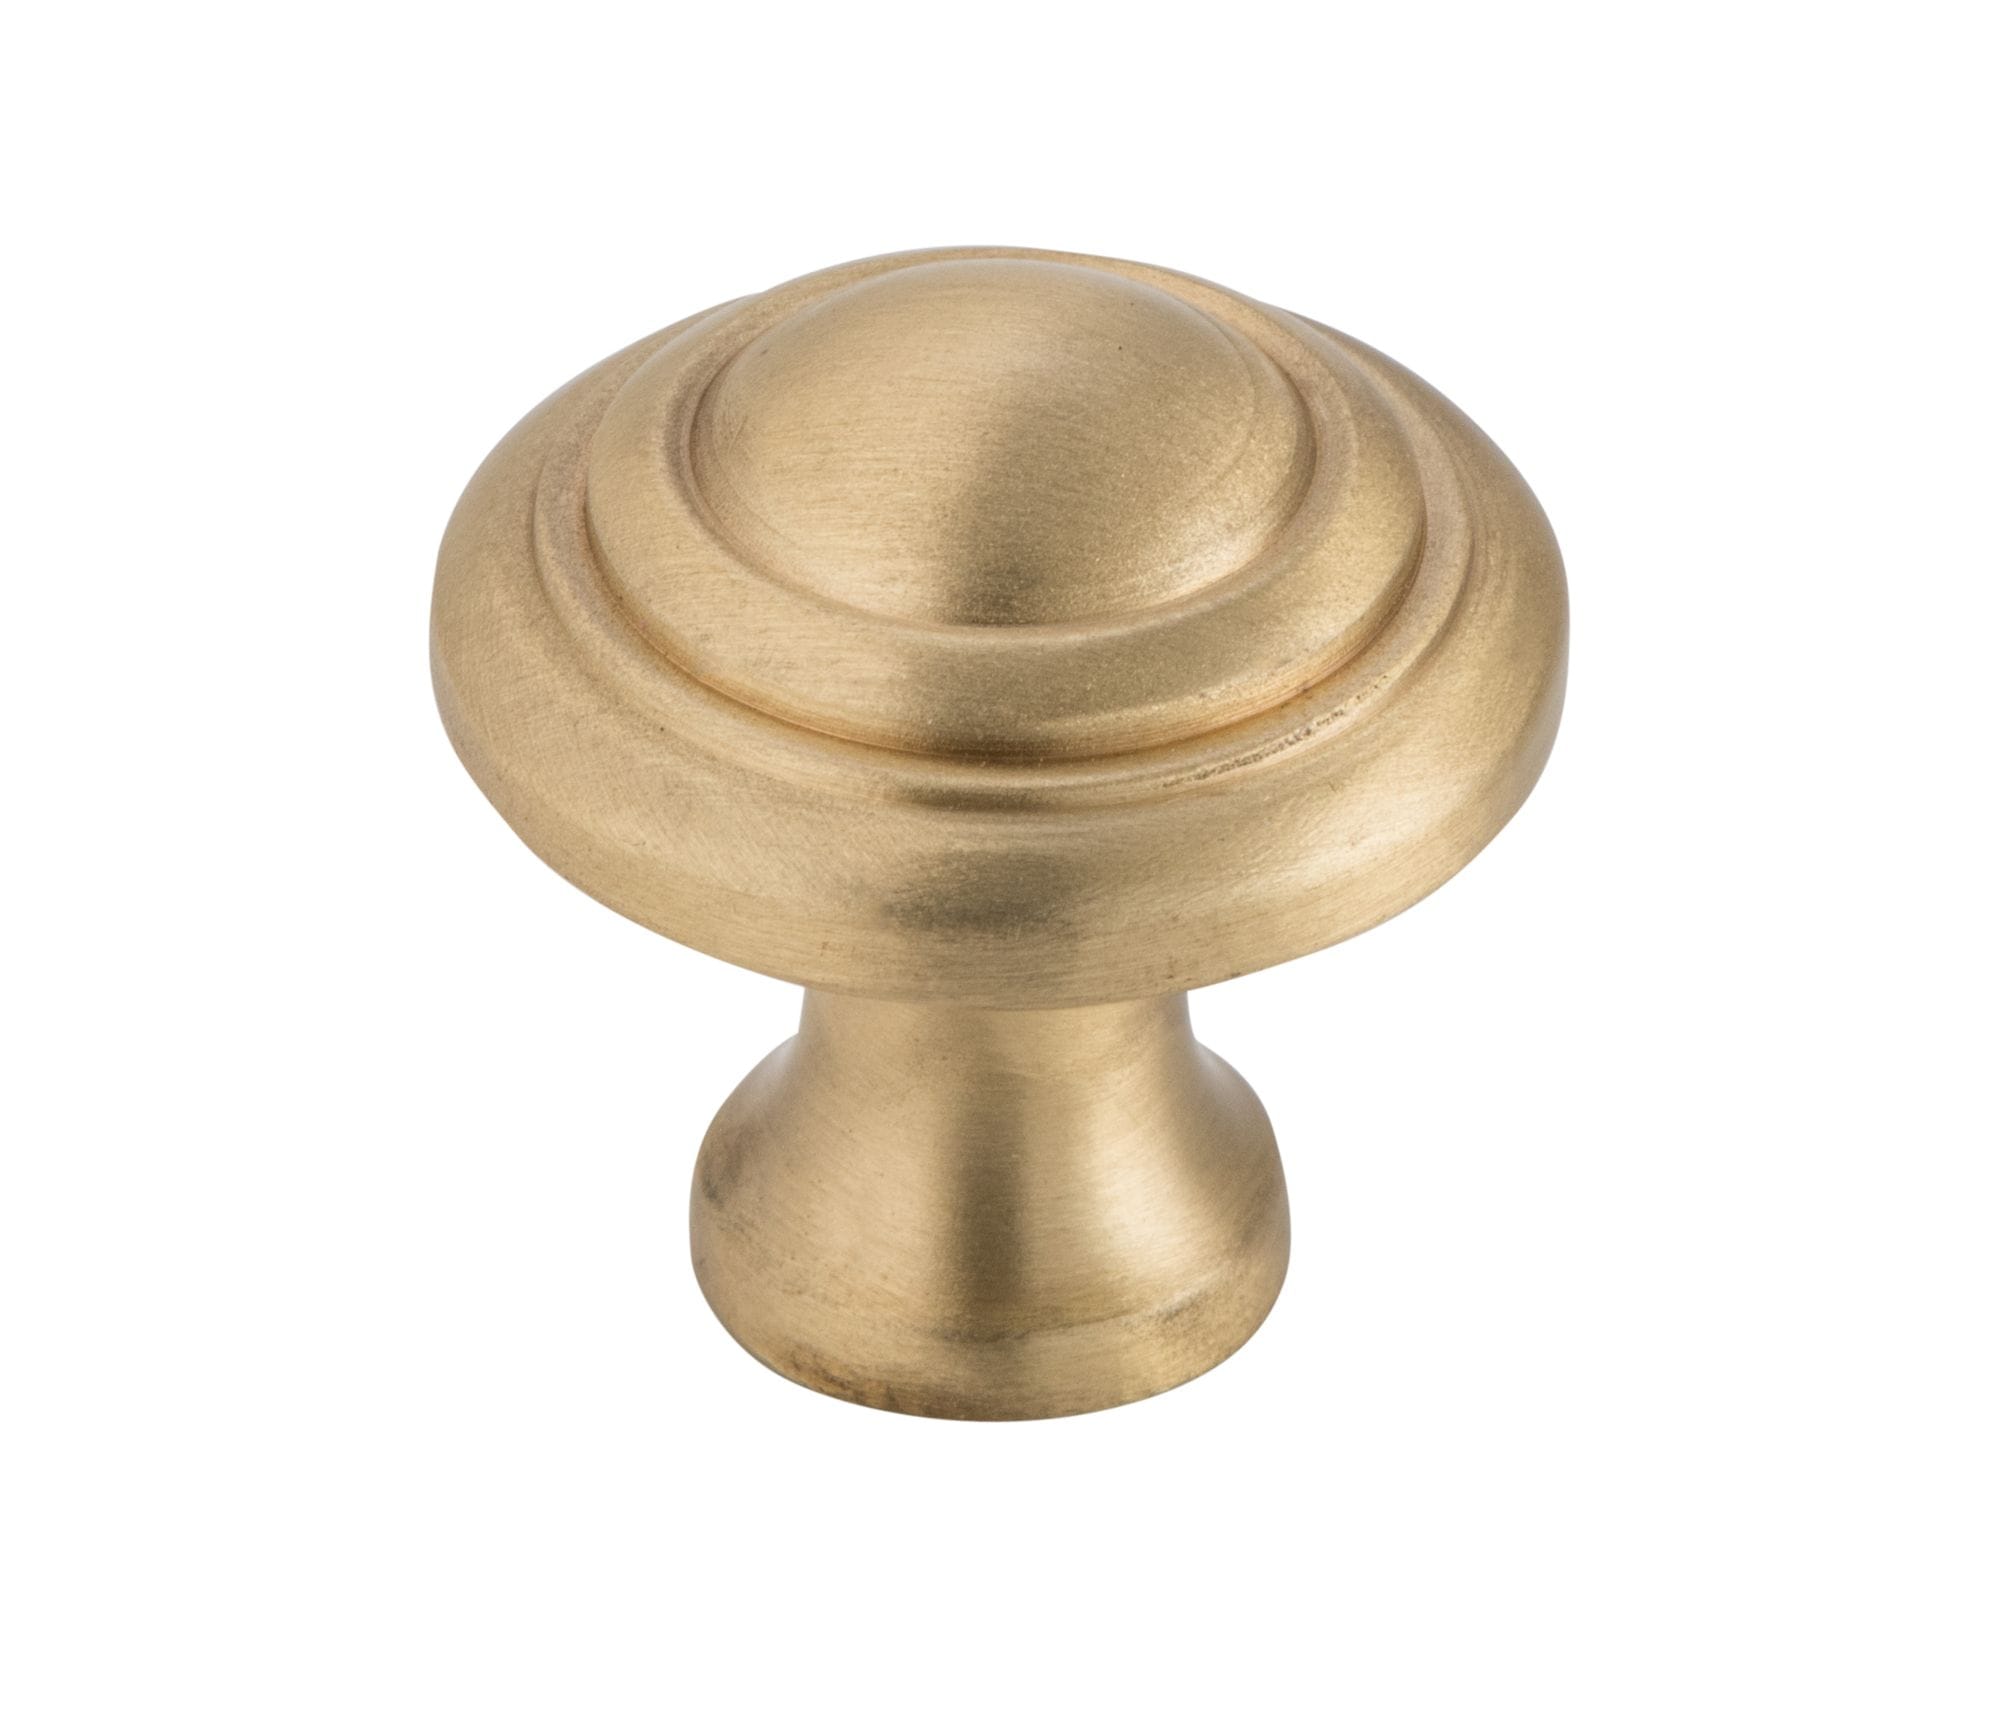 Cupboard Knob Domed Satin Brass 25mm